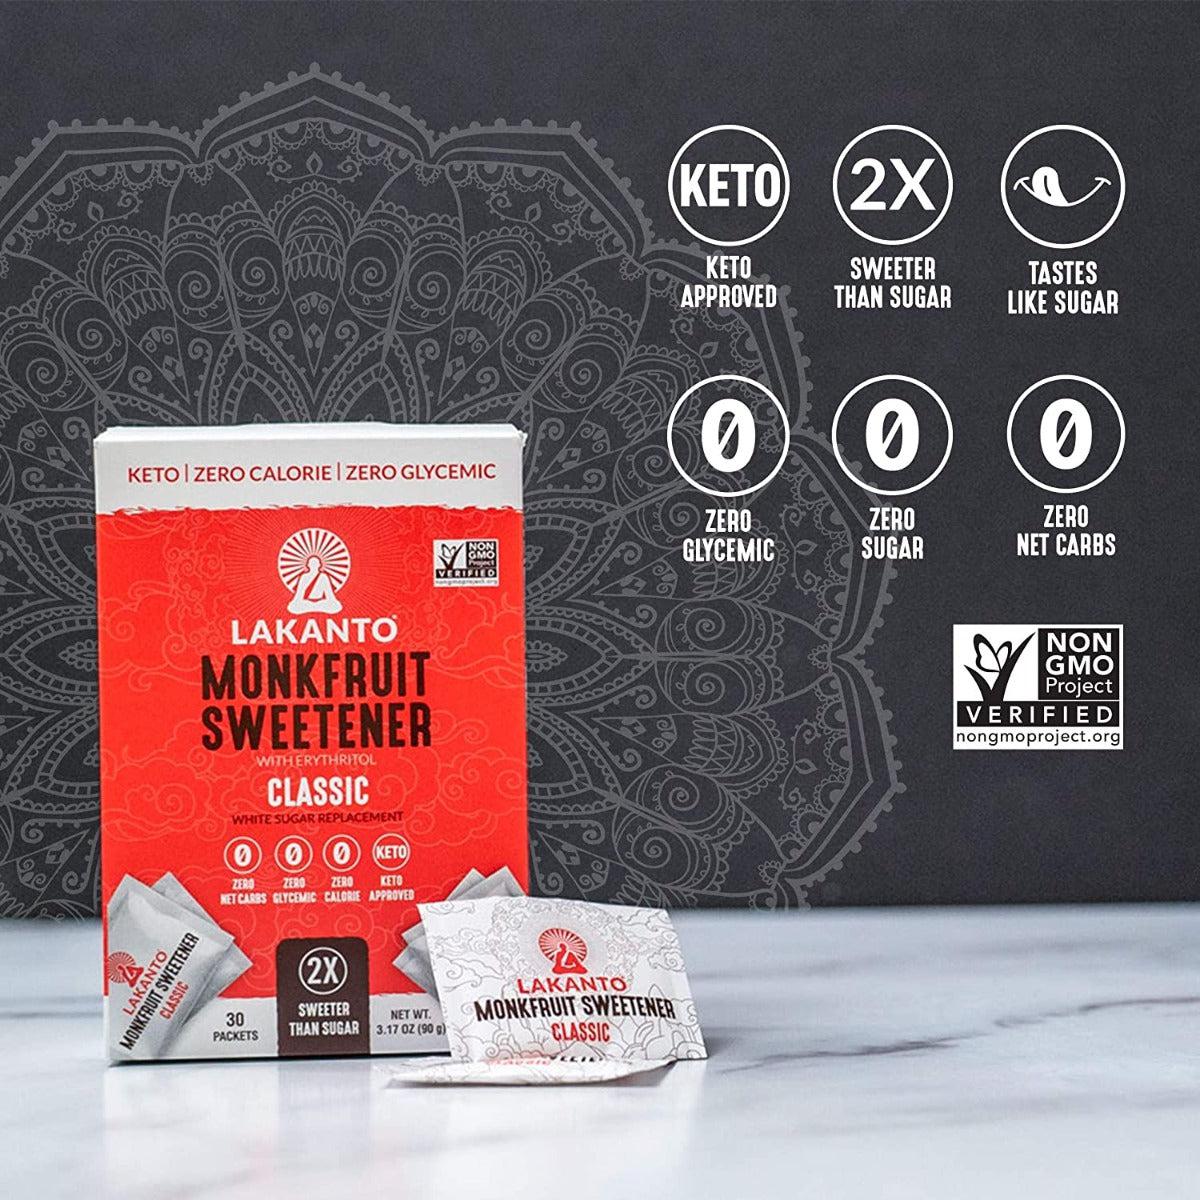 Lakanto Monk Fruit Sweetener With Erythritol Classic Keto Zero Calorie Zero Glycemic 30 Sachets